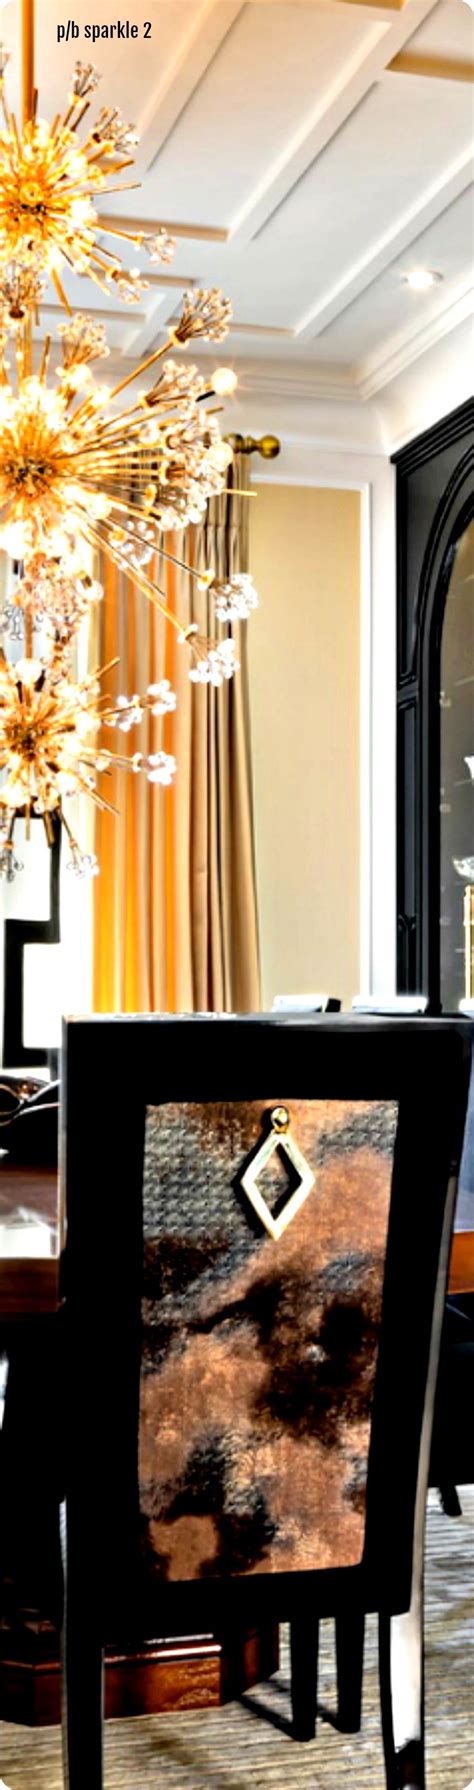 pin  sparkle  fairytale life  luxury gold black elegant interiors luxury